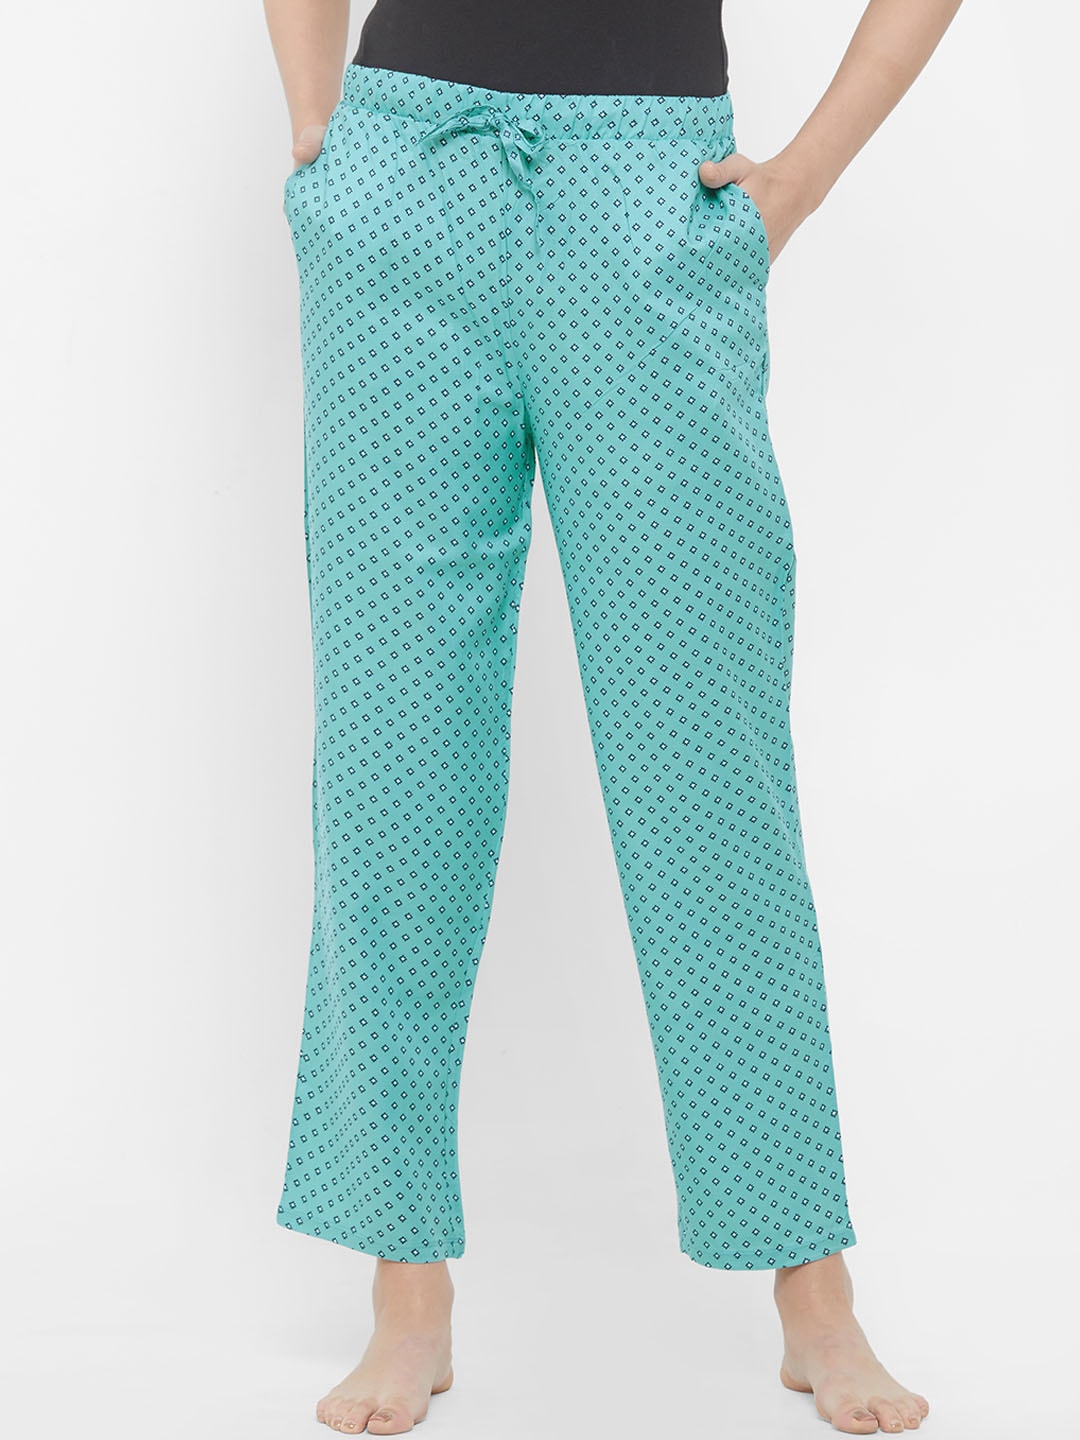 SOIE Women Turquoise Blue Printed Pyjamas NT-121 Price in India